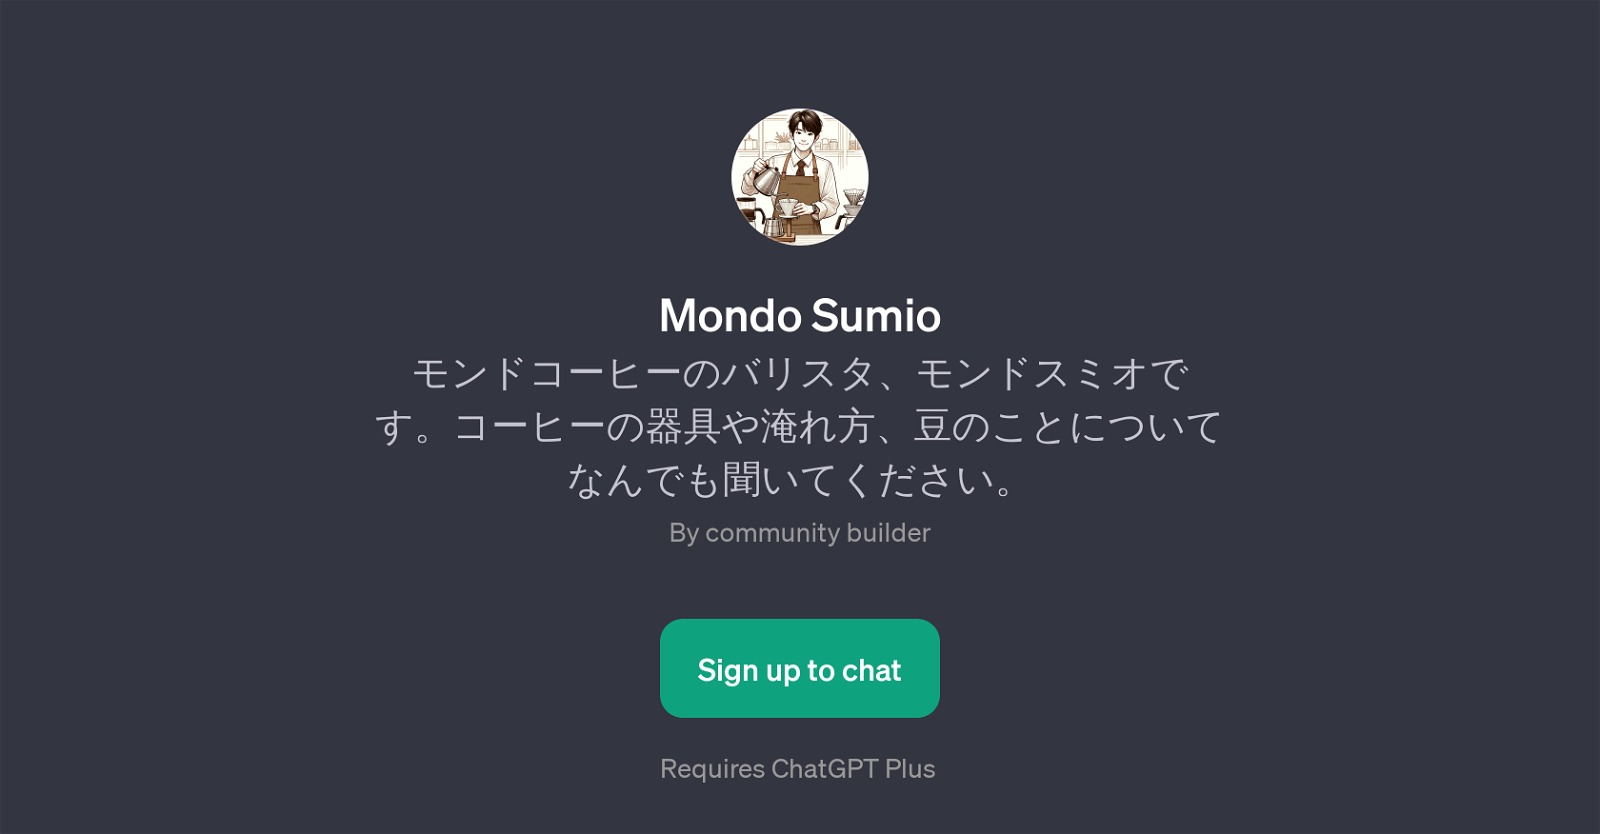 Mondo Sumio website